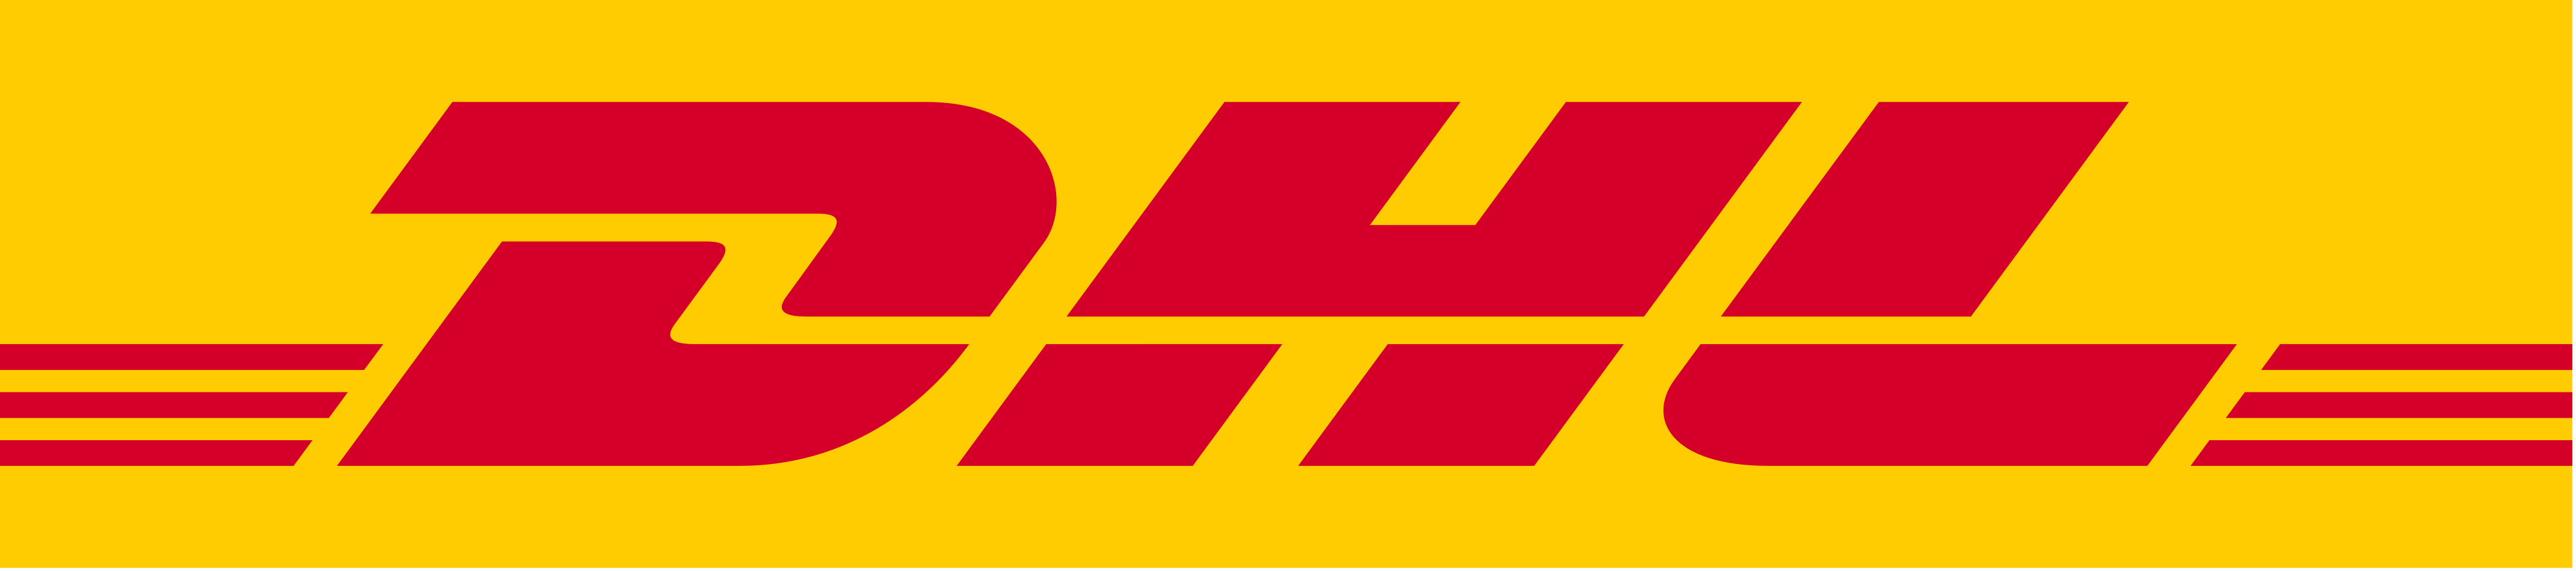 dhl logo - DHL Logo